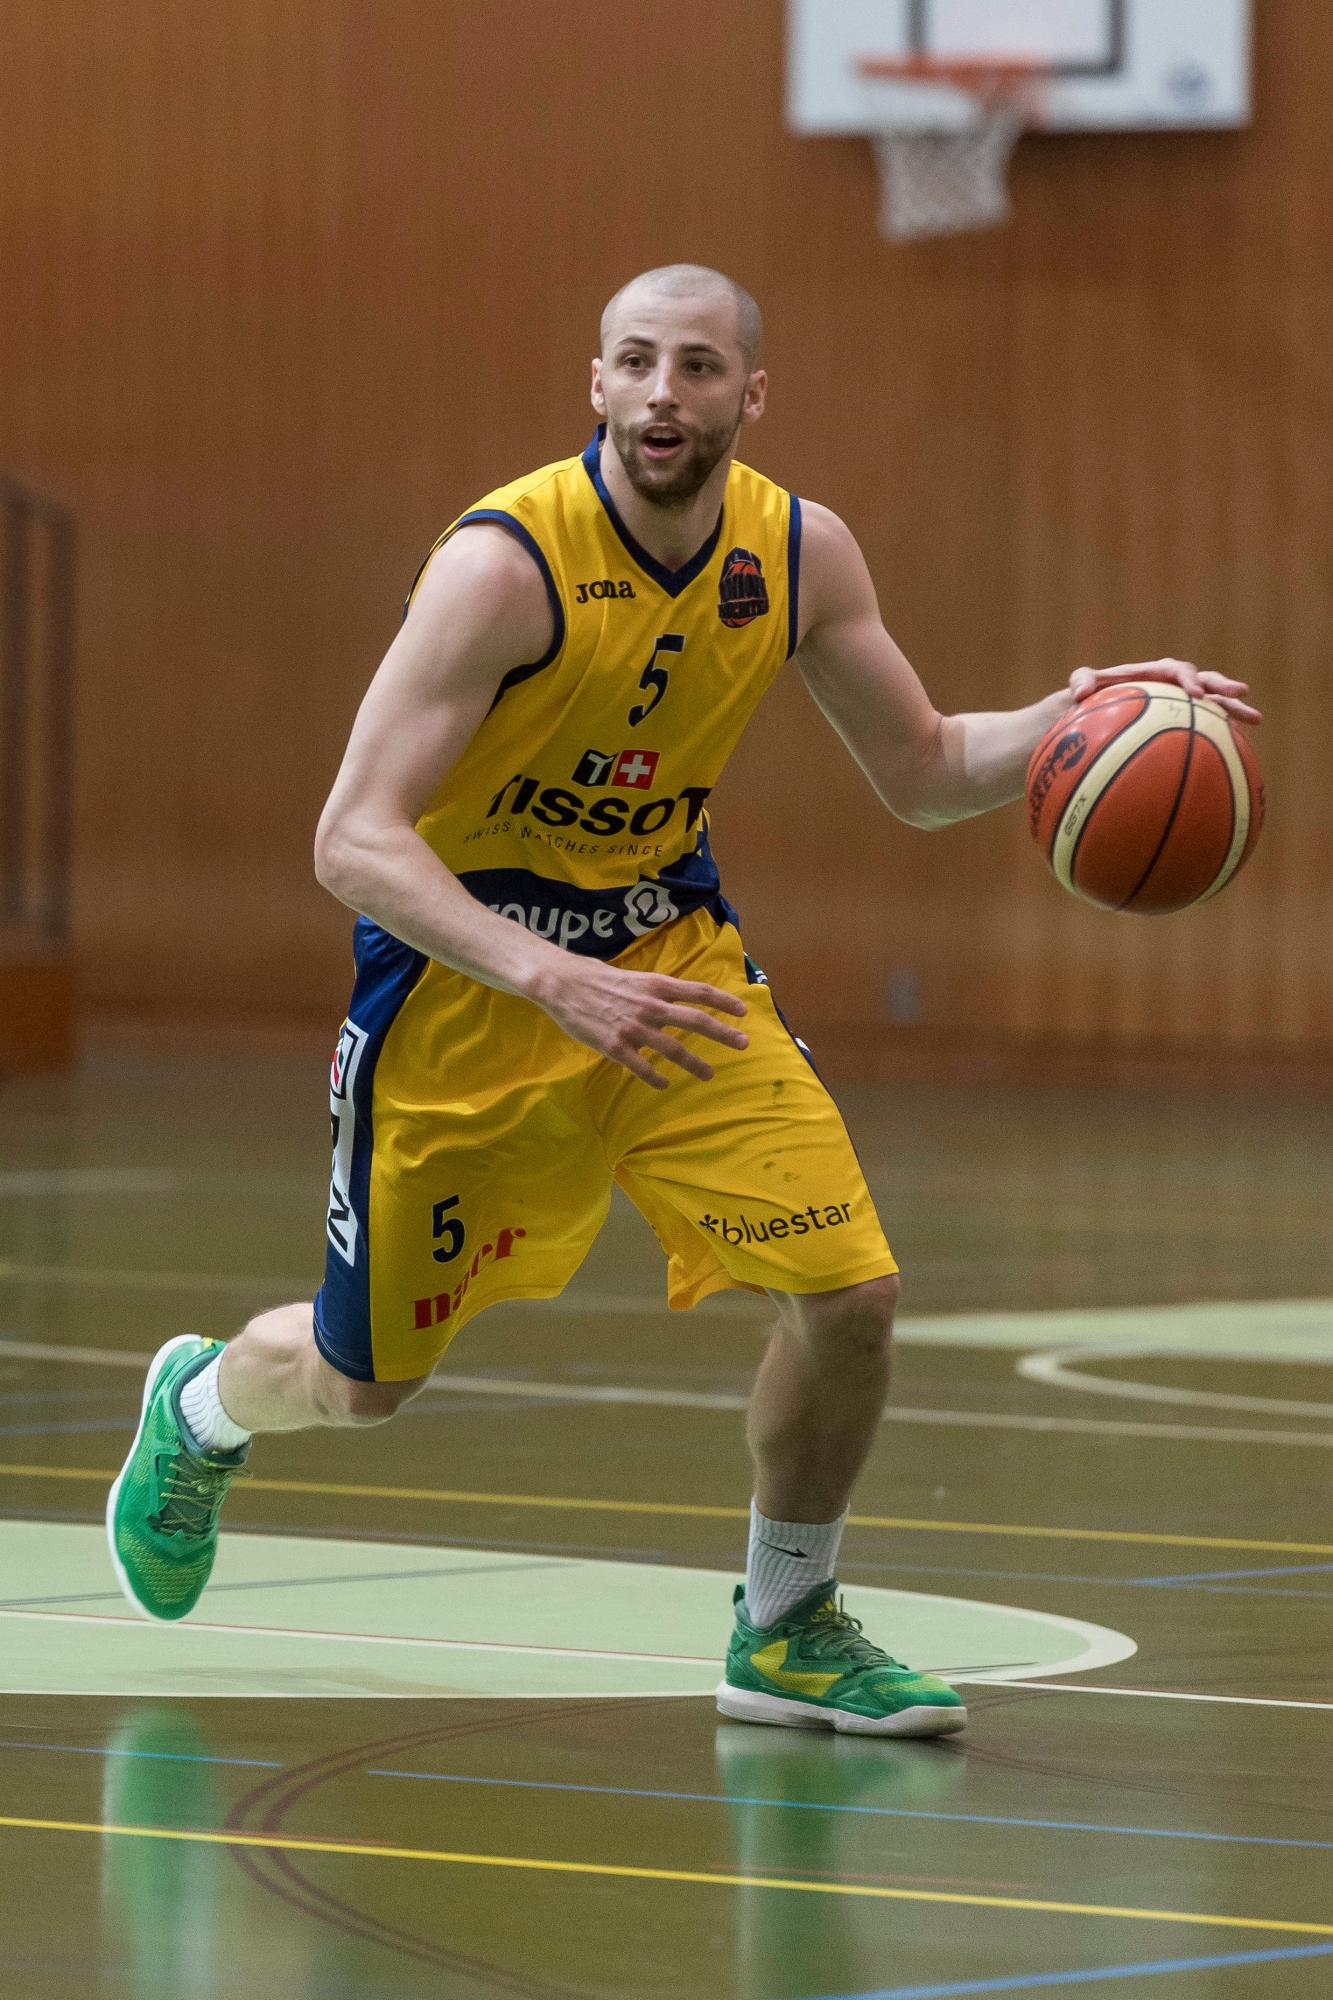 Basketball : Union Neuchatel - Massagno
En jaune Brian Savoy (5)

Neuchatel, le 18.03.2017
Photo : Lucas Vuitel BASKETBALL